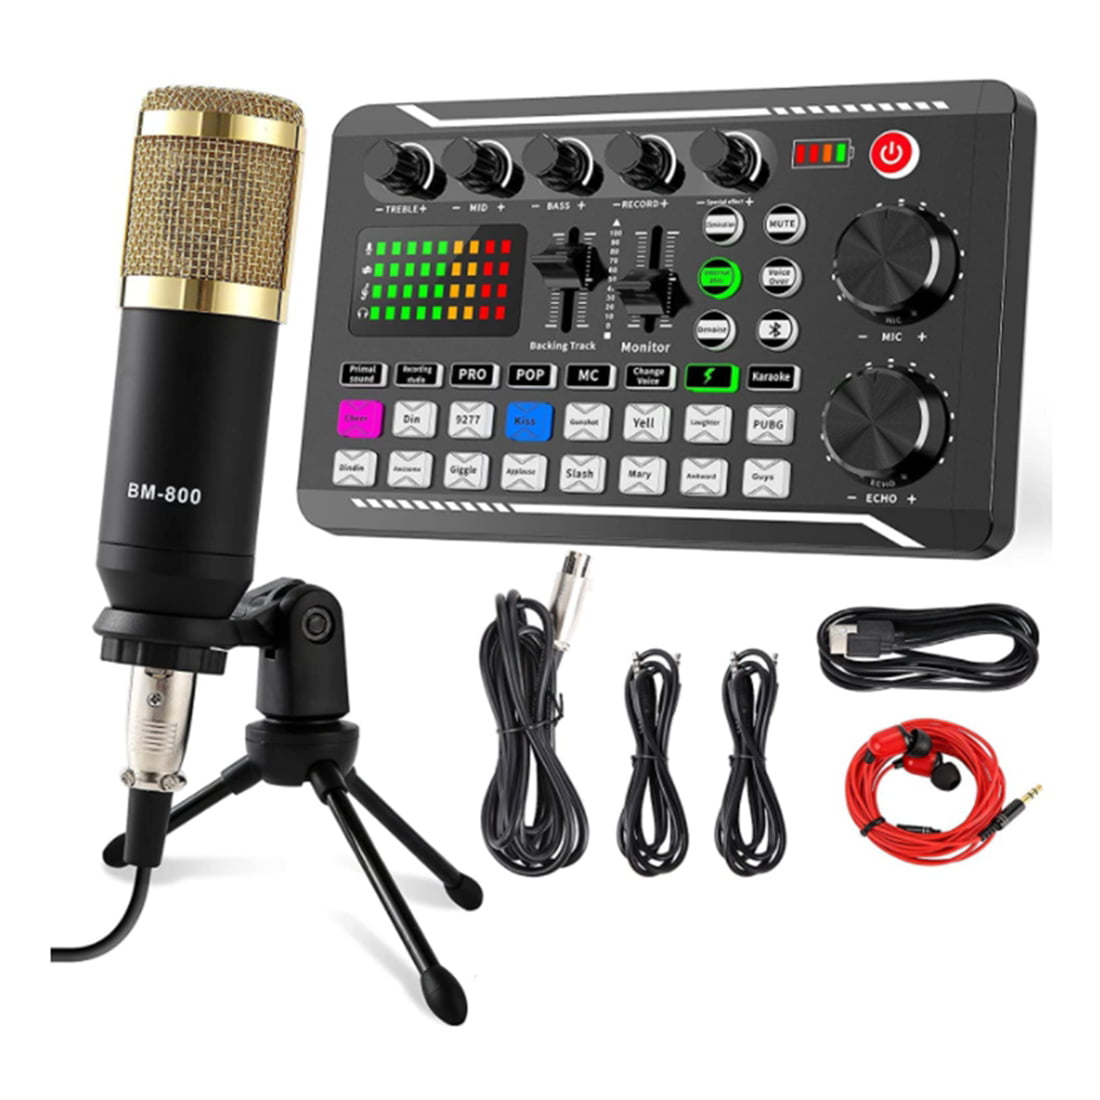 F998 Sound Card Kit,BM-800 Microphone Kit,with Live Sound Card,Audio ...